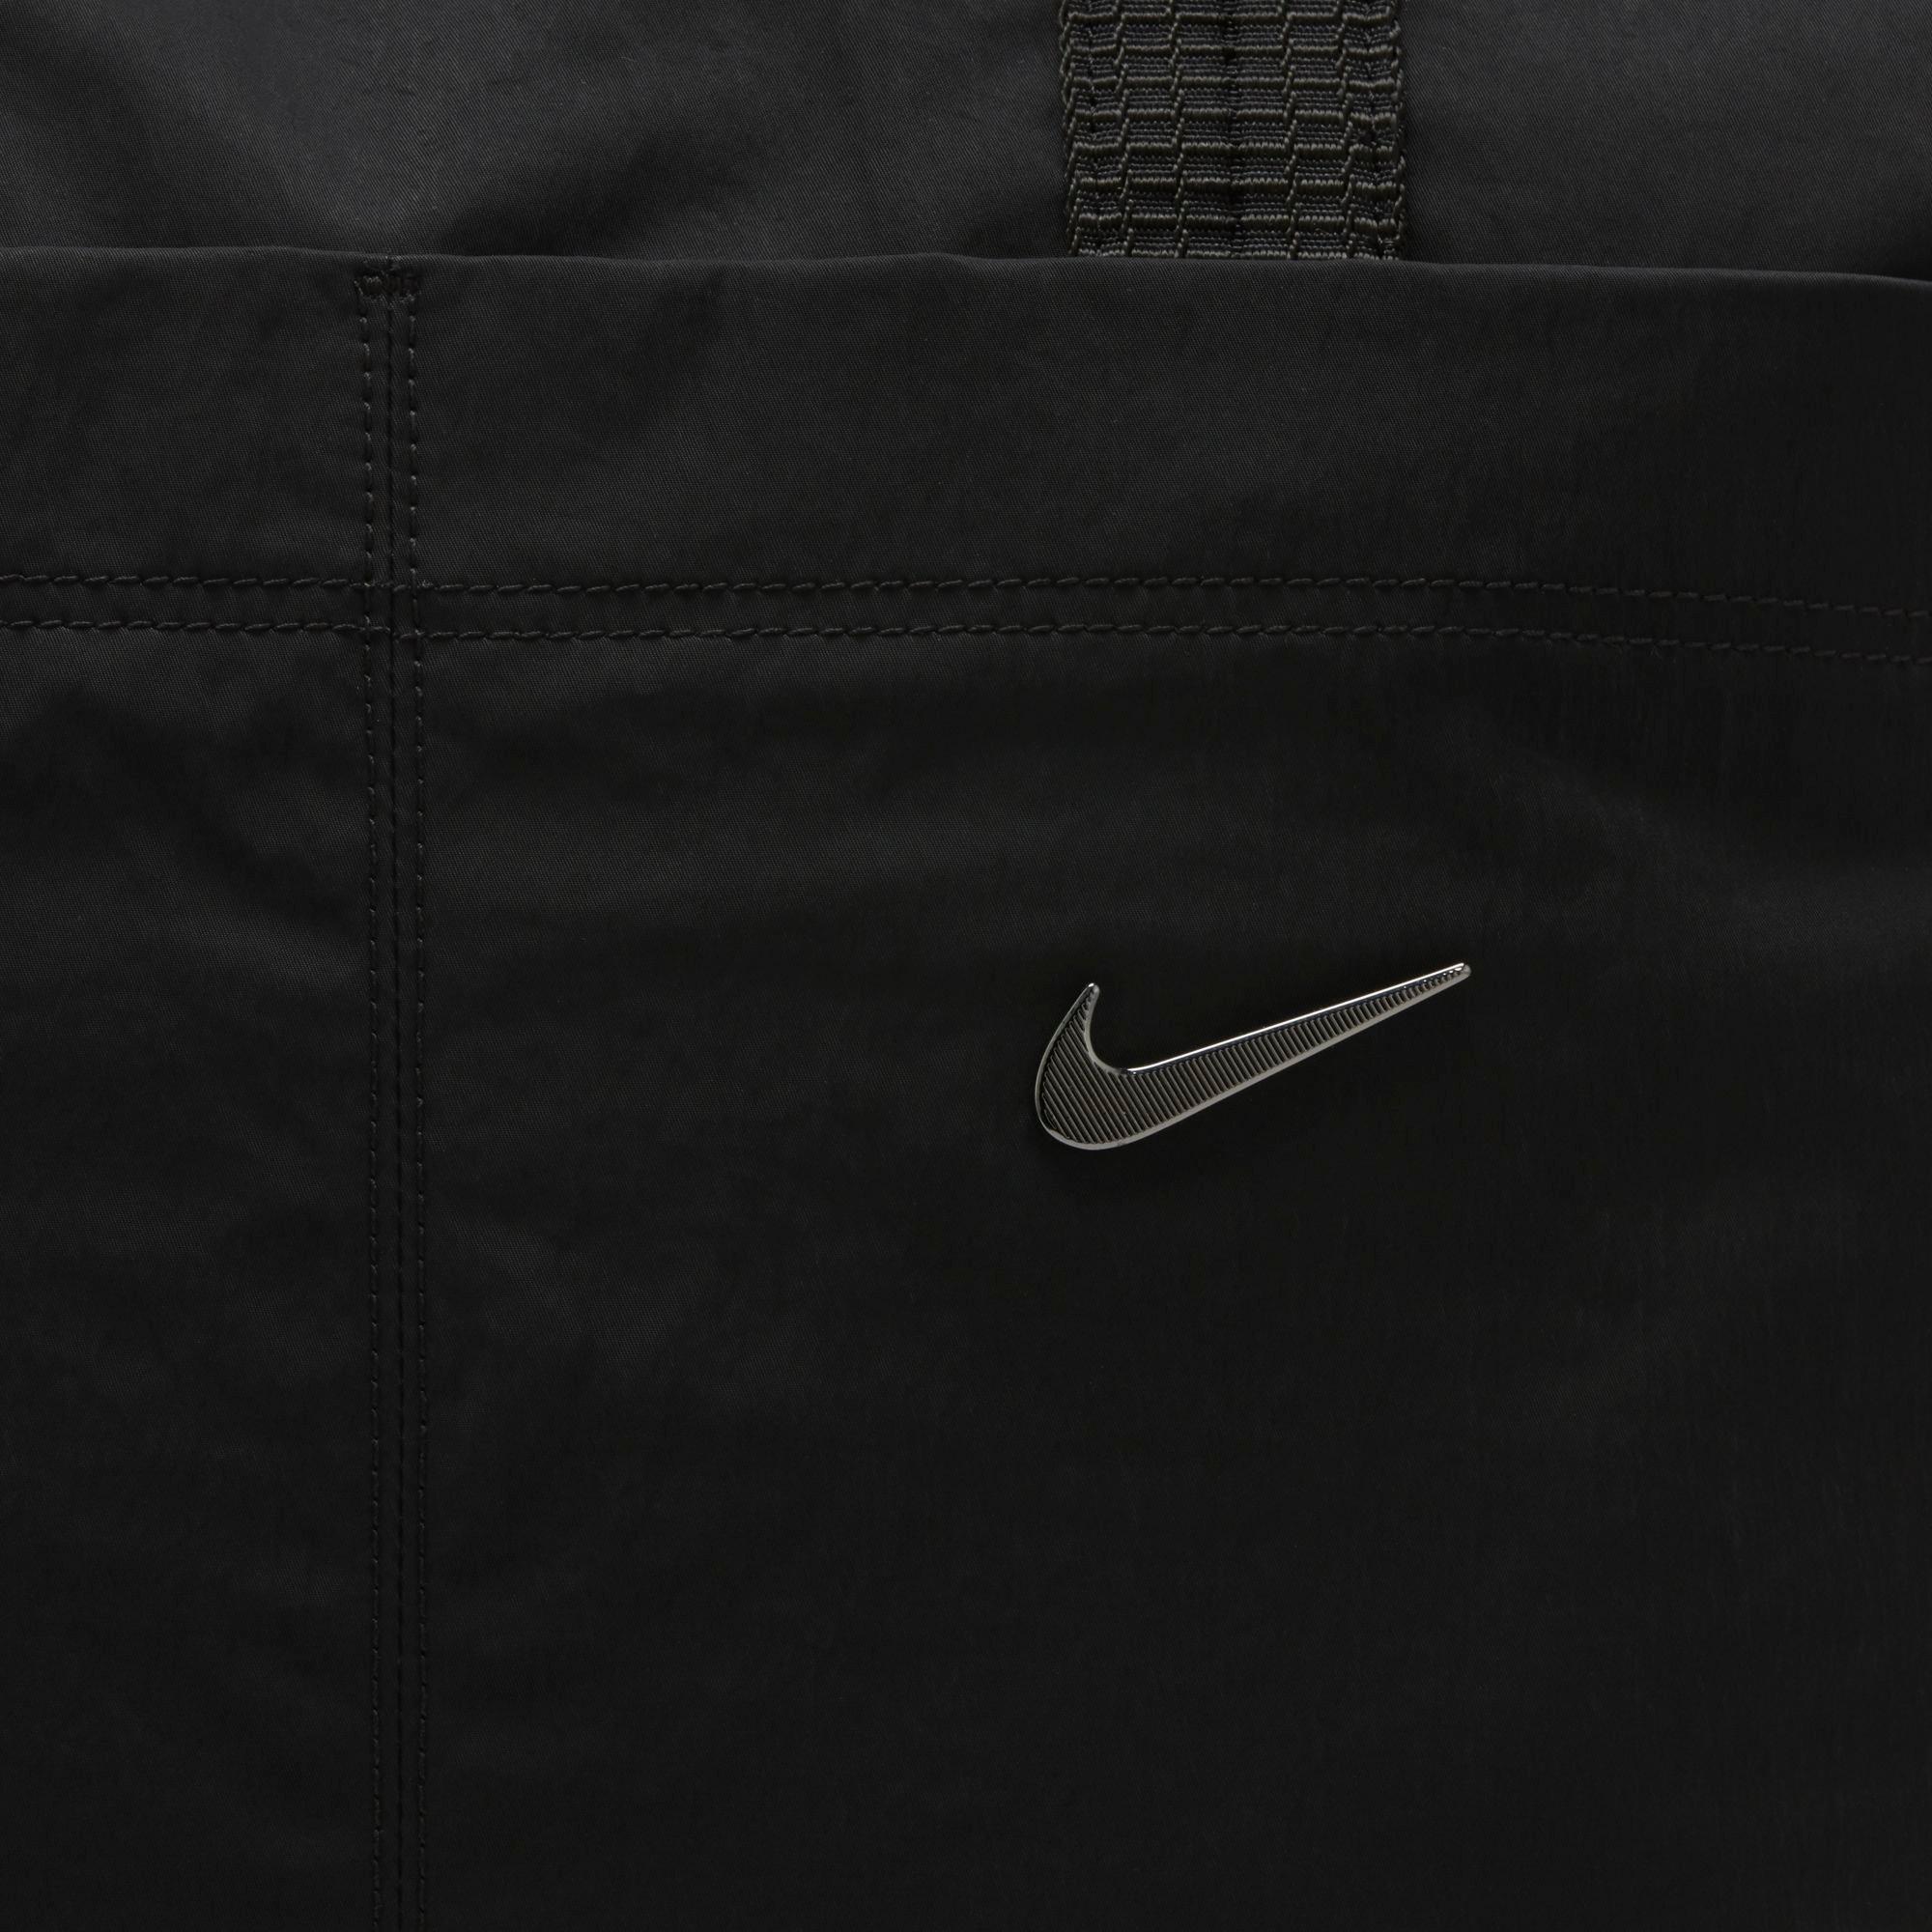 3 in 1- Nike One Luxe- Women's Training Bag Stone CV0058-230